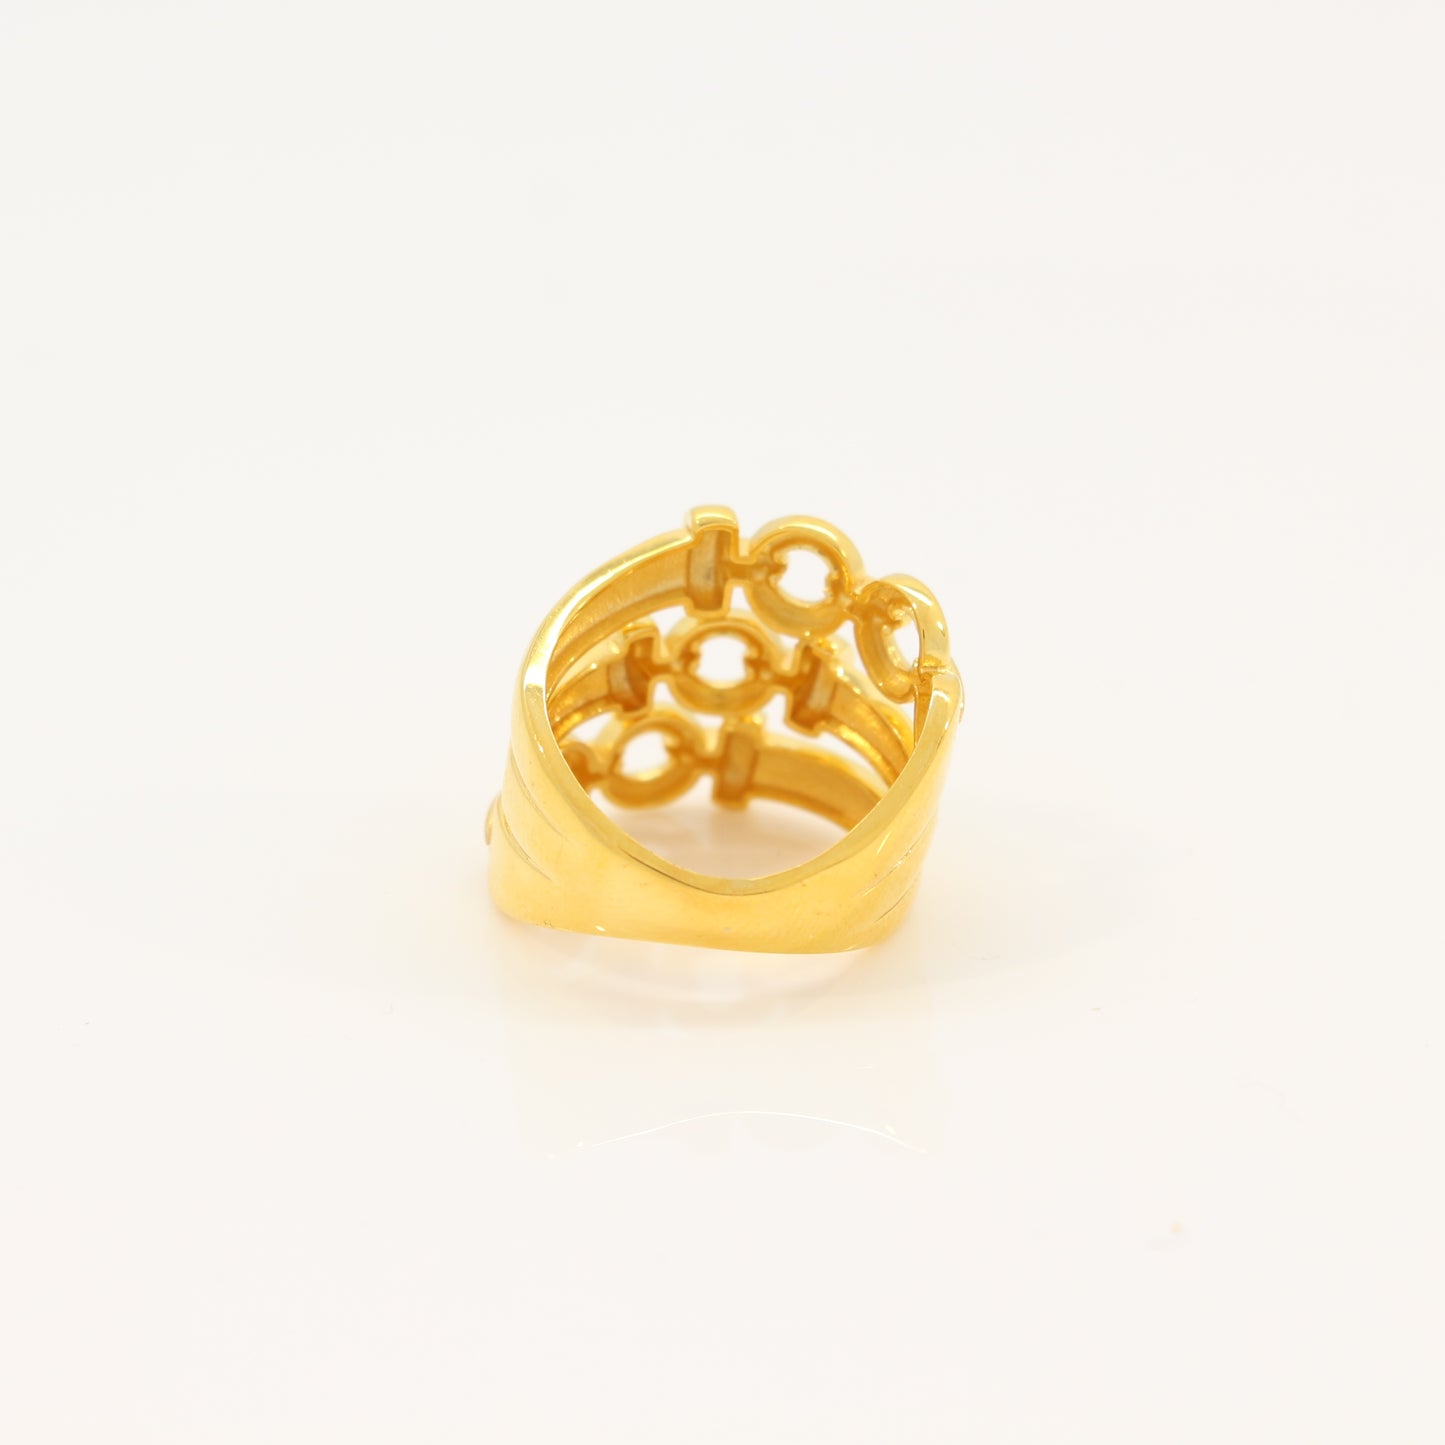 21K Gold Ring (size 6.5/7.5)